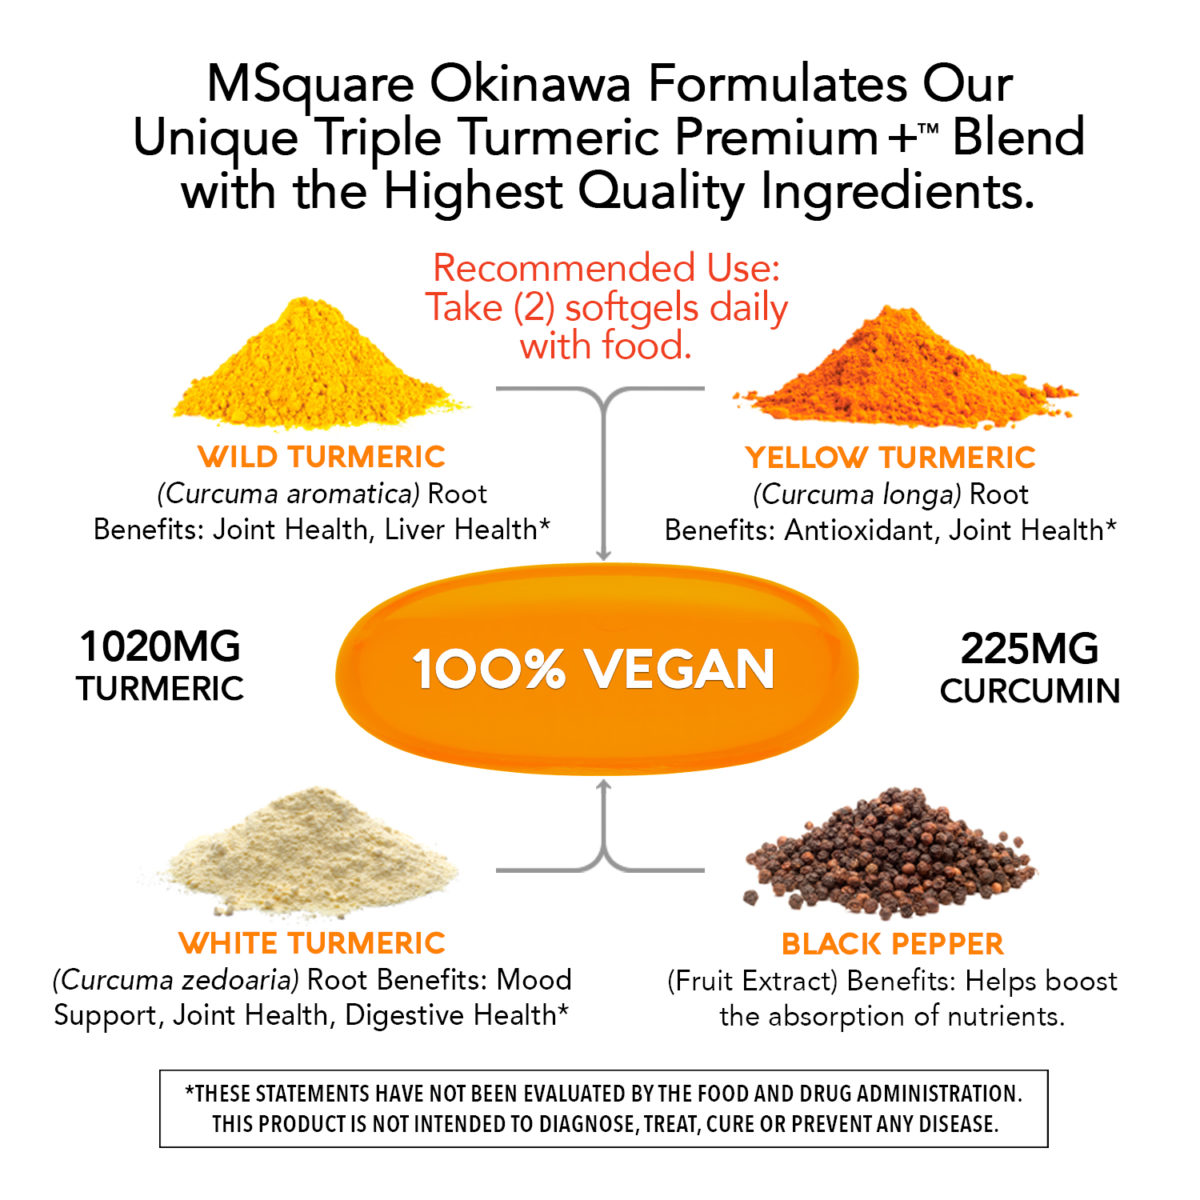 MSquare Okinawa Triple Turmeric Premium + Product Benefits